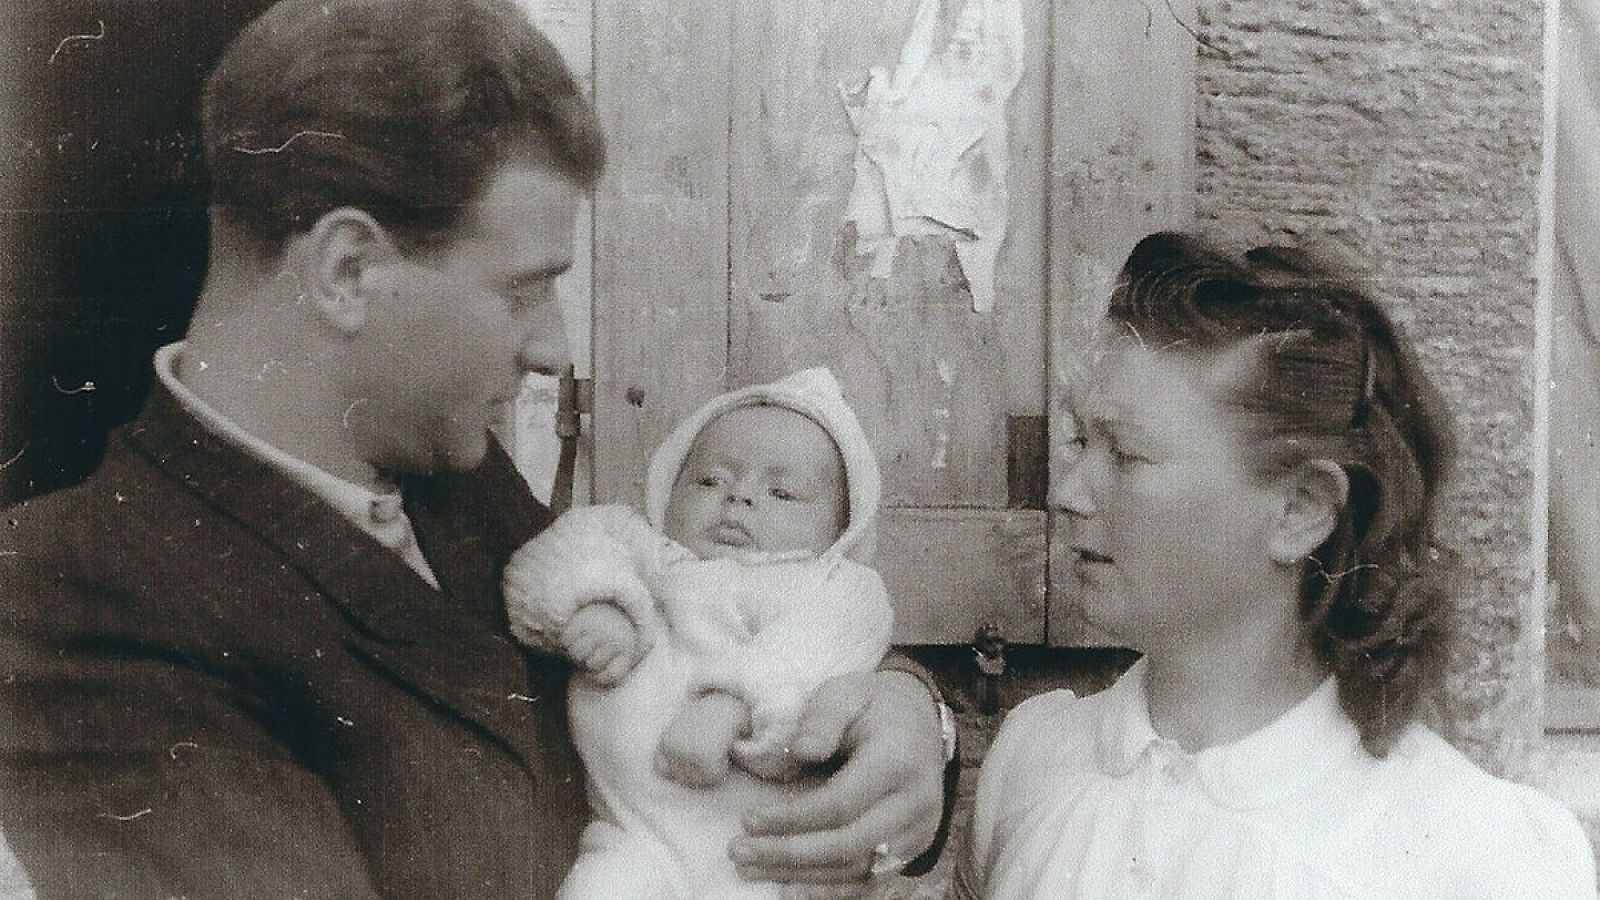 Manya y Meyer Korenblit con su primer hijo Sammy. Eggenfeldon, Alemania, 1947.